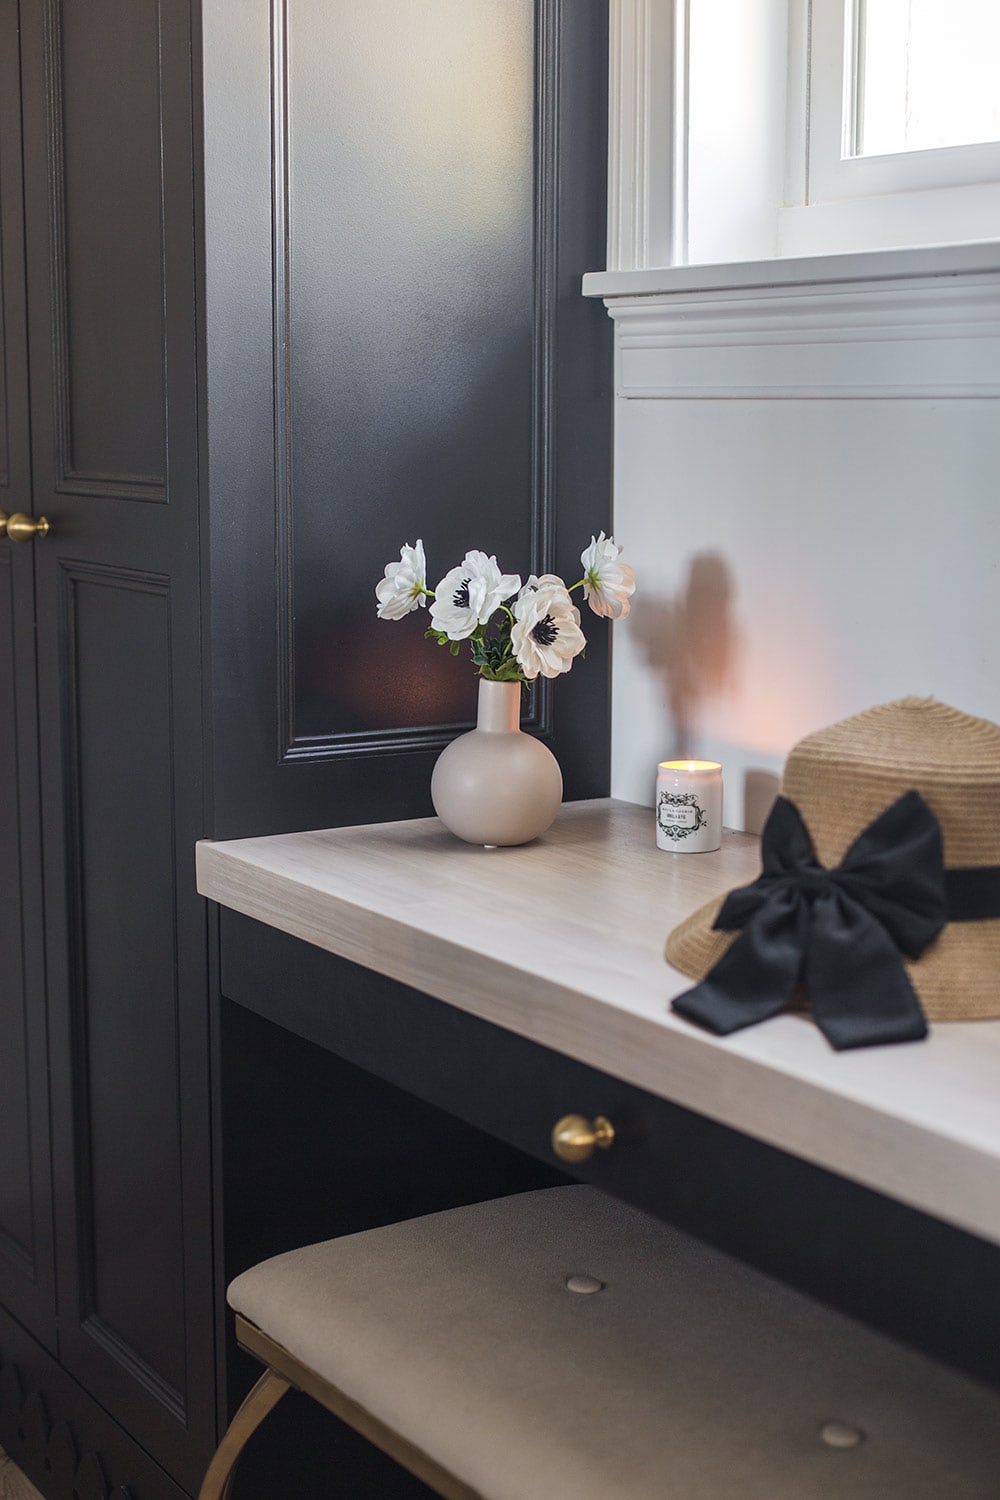 black closet vanity desk with white anemone flowers